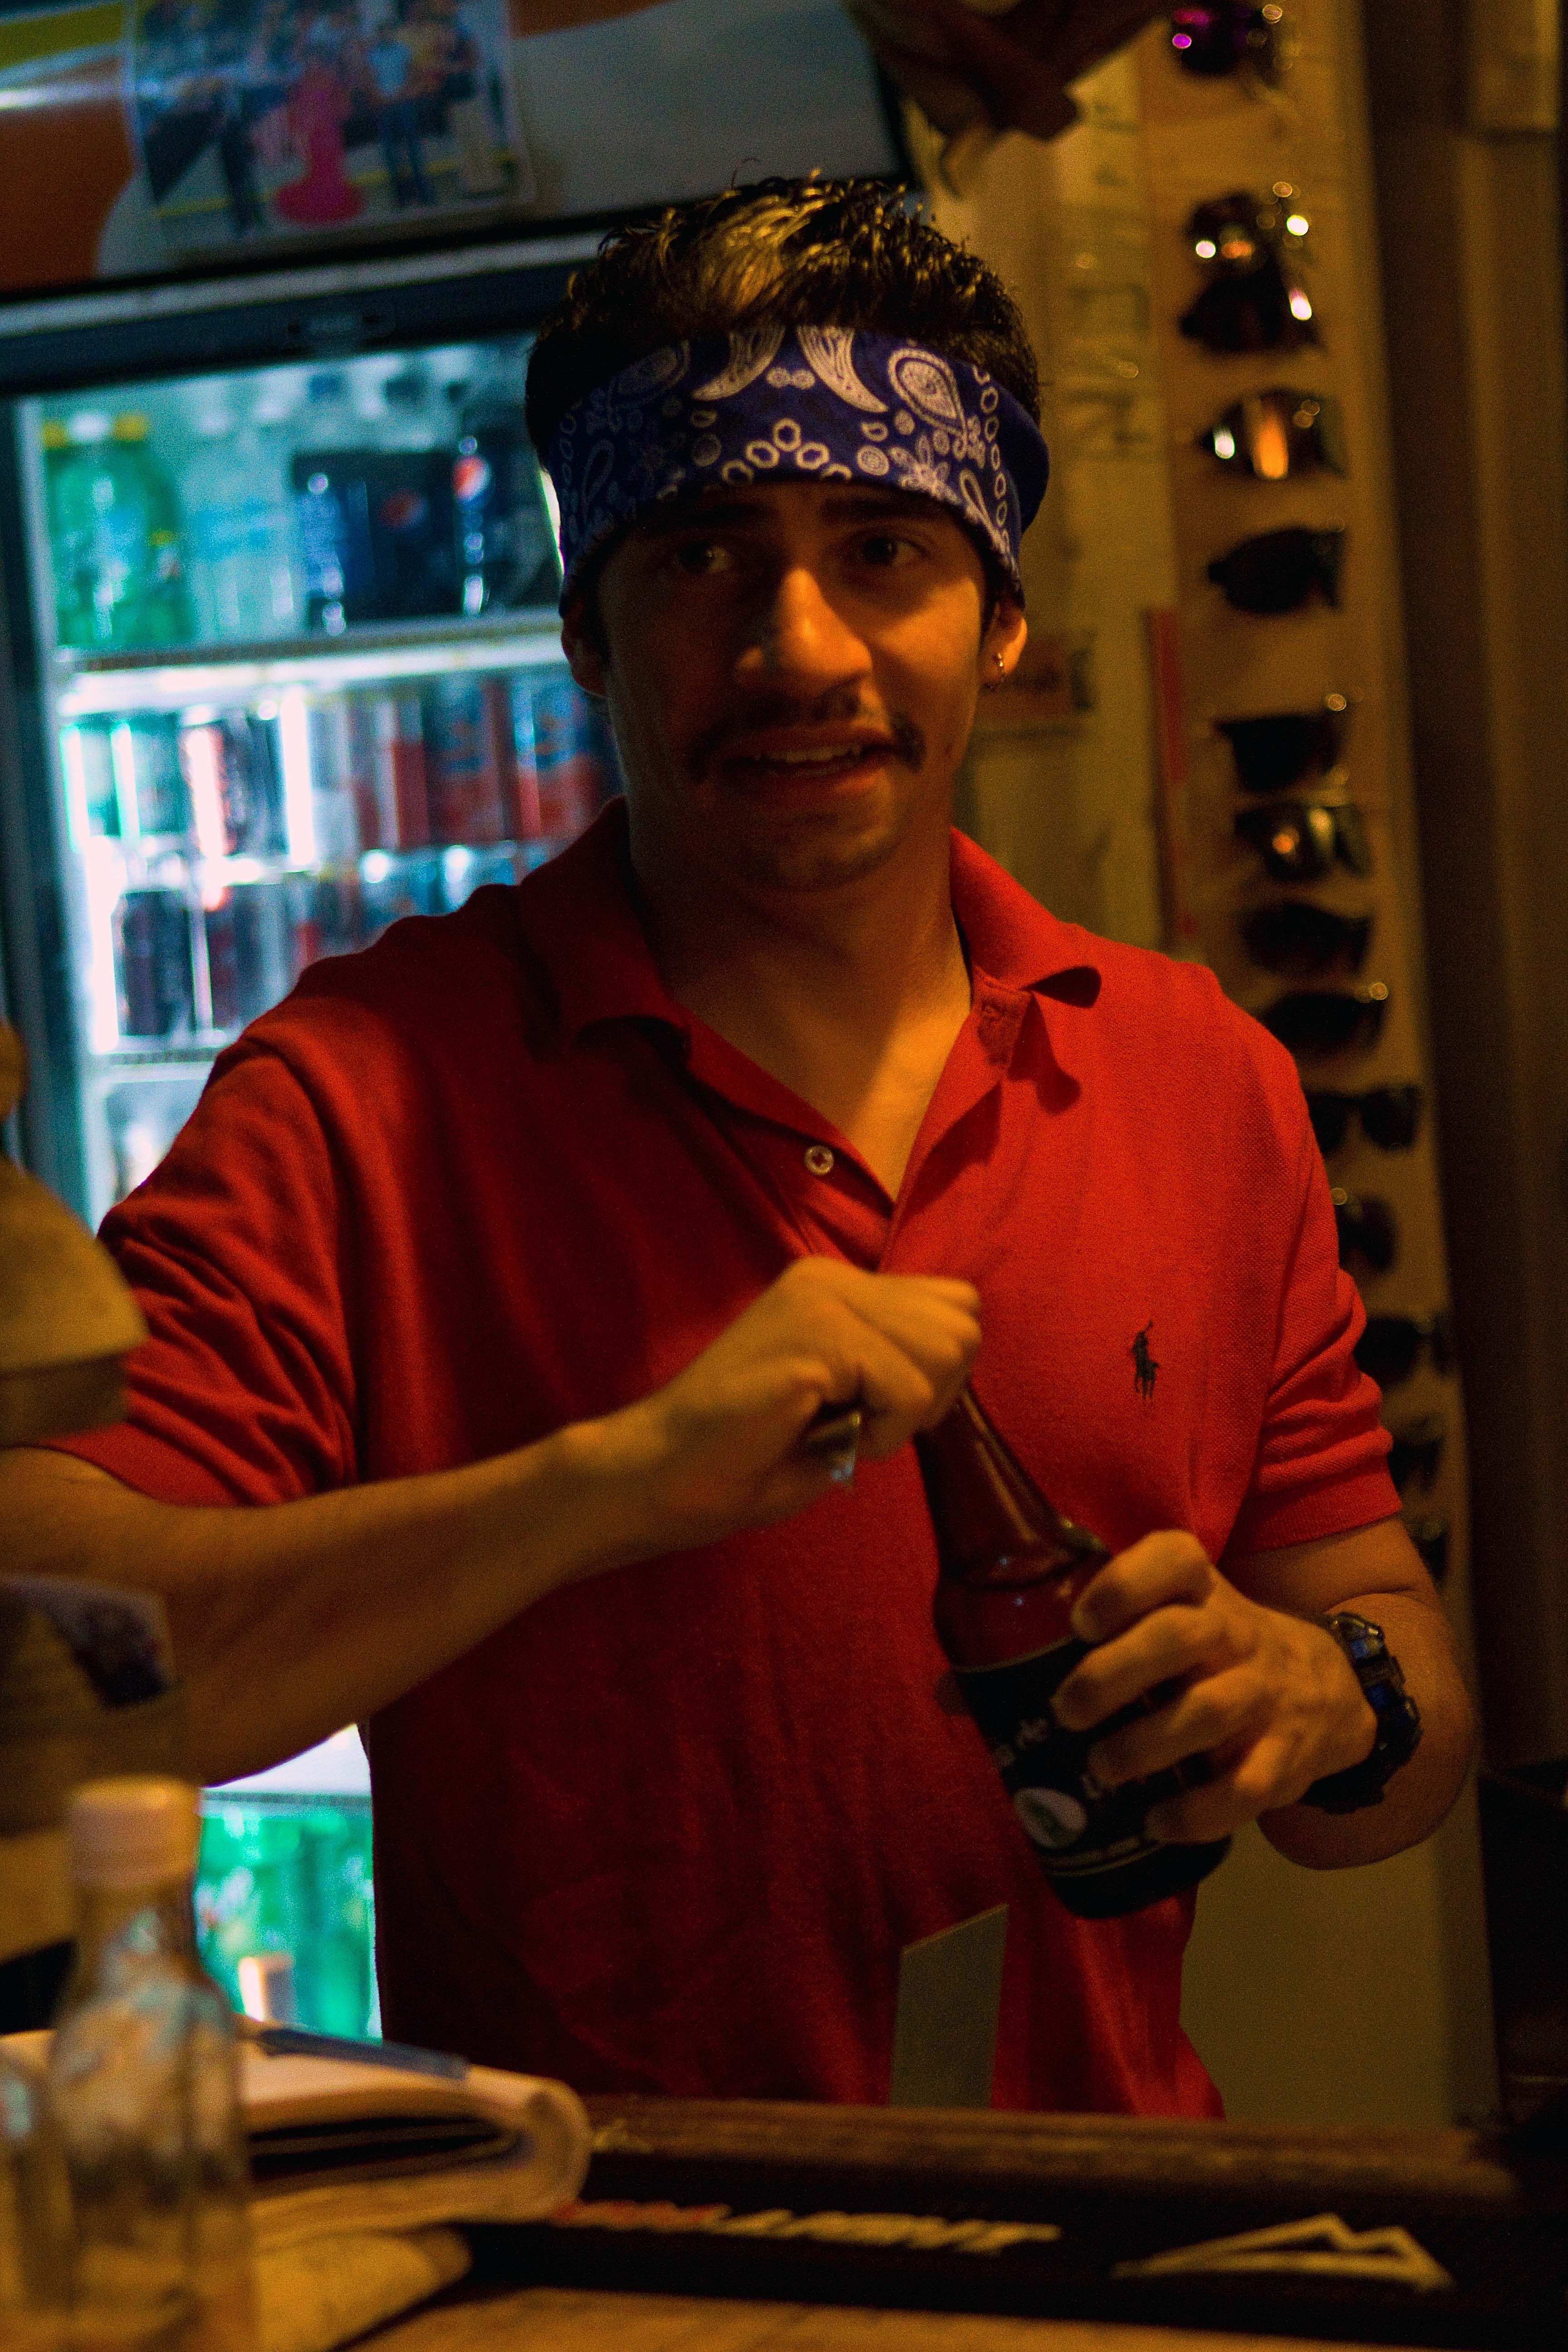 Bartender in the short film, Ultimo Pasajero (Las Passenger).